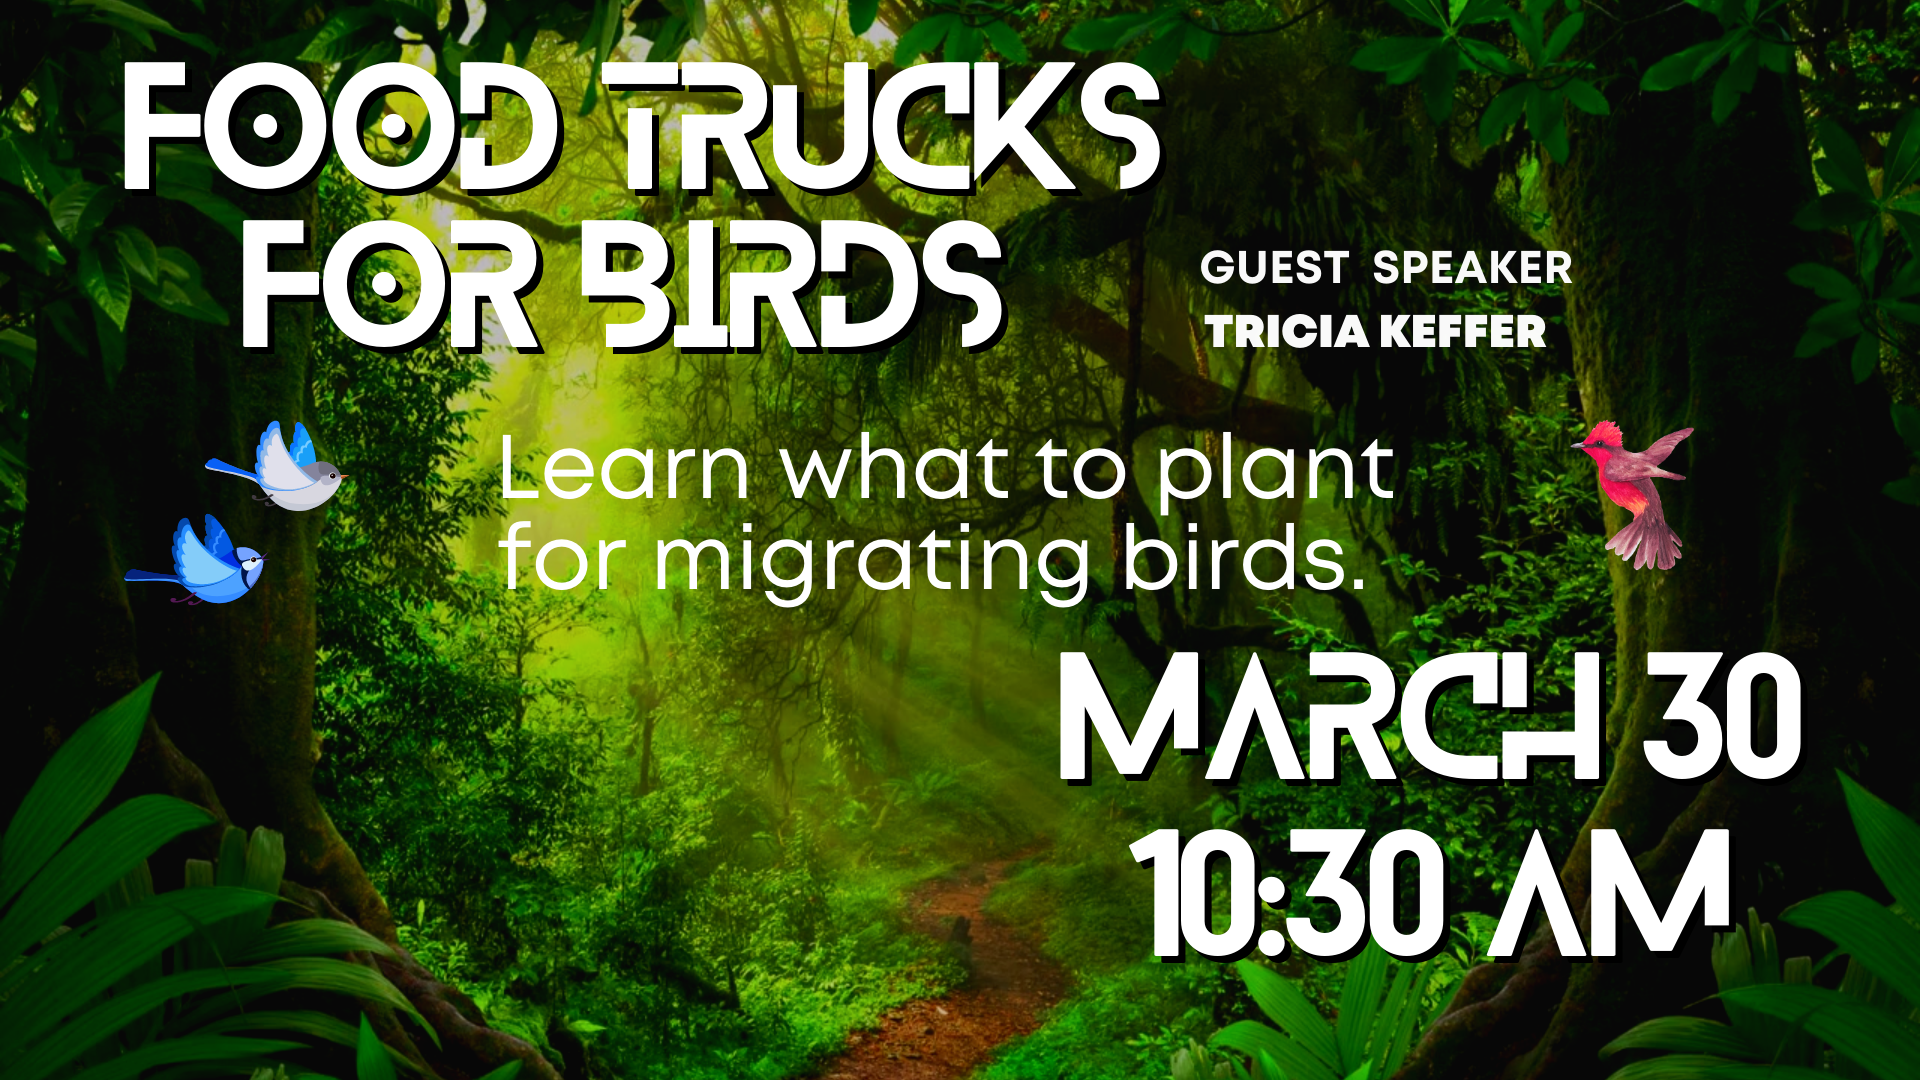 Food Trucks for birds